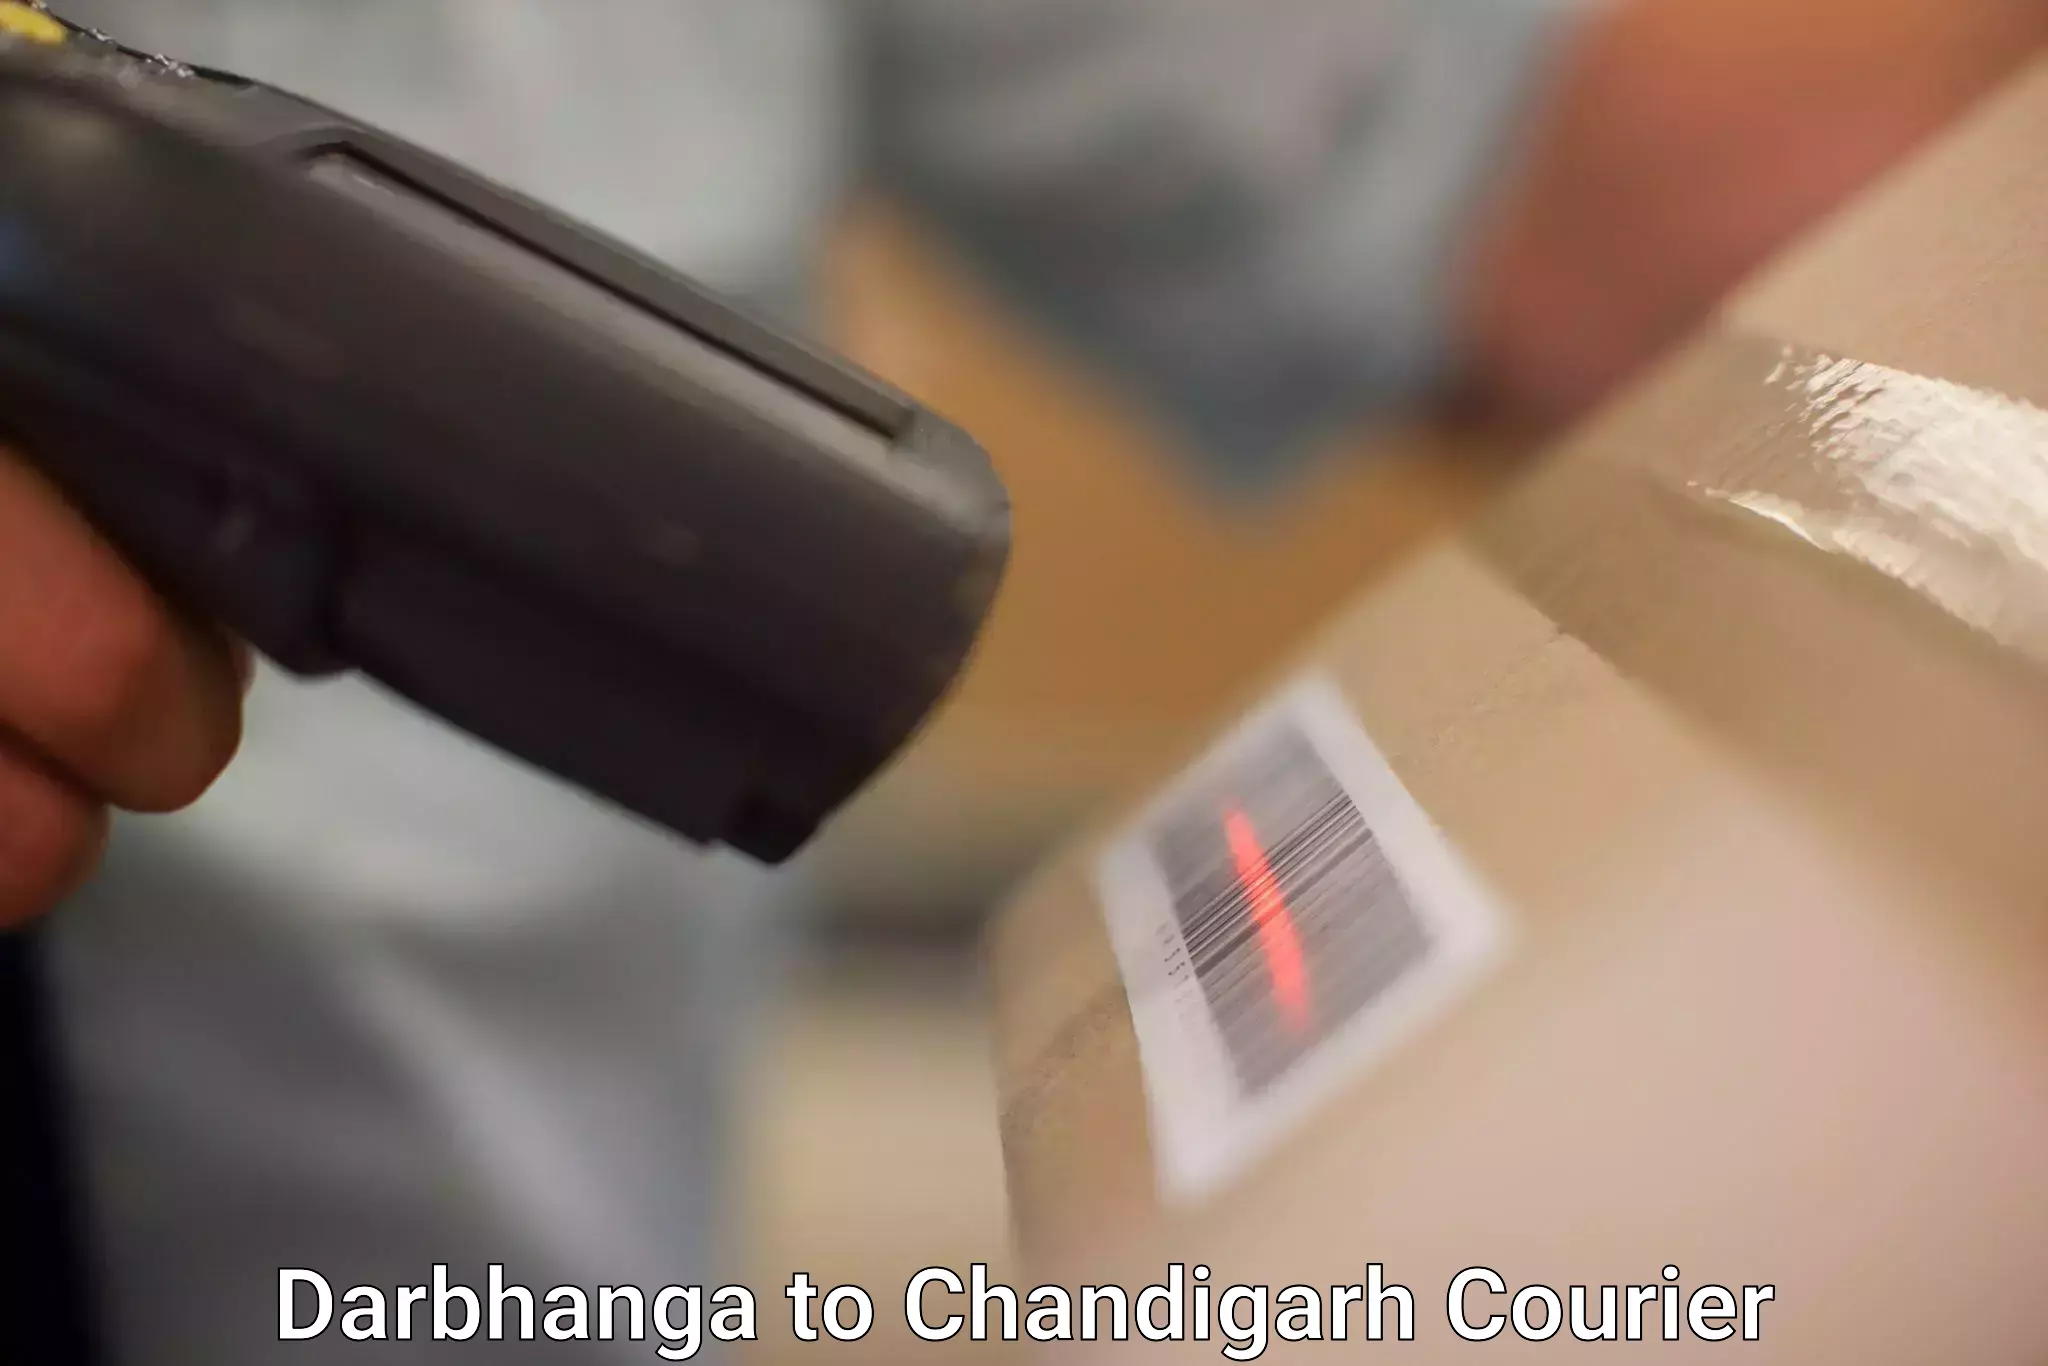 User-friendly courier app Darbhanga to Chandigarh